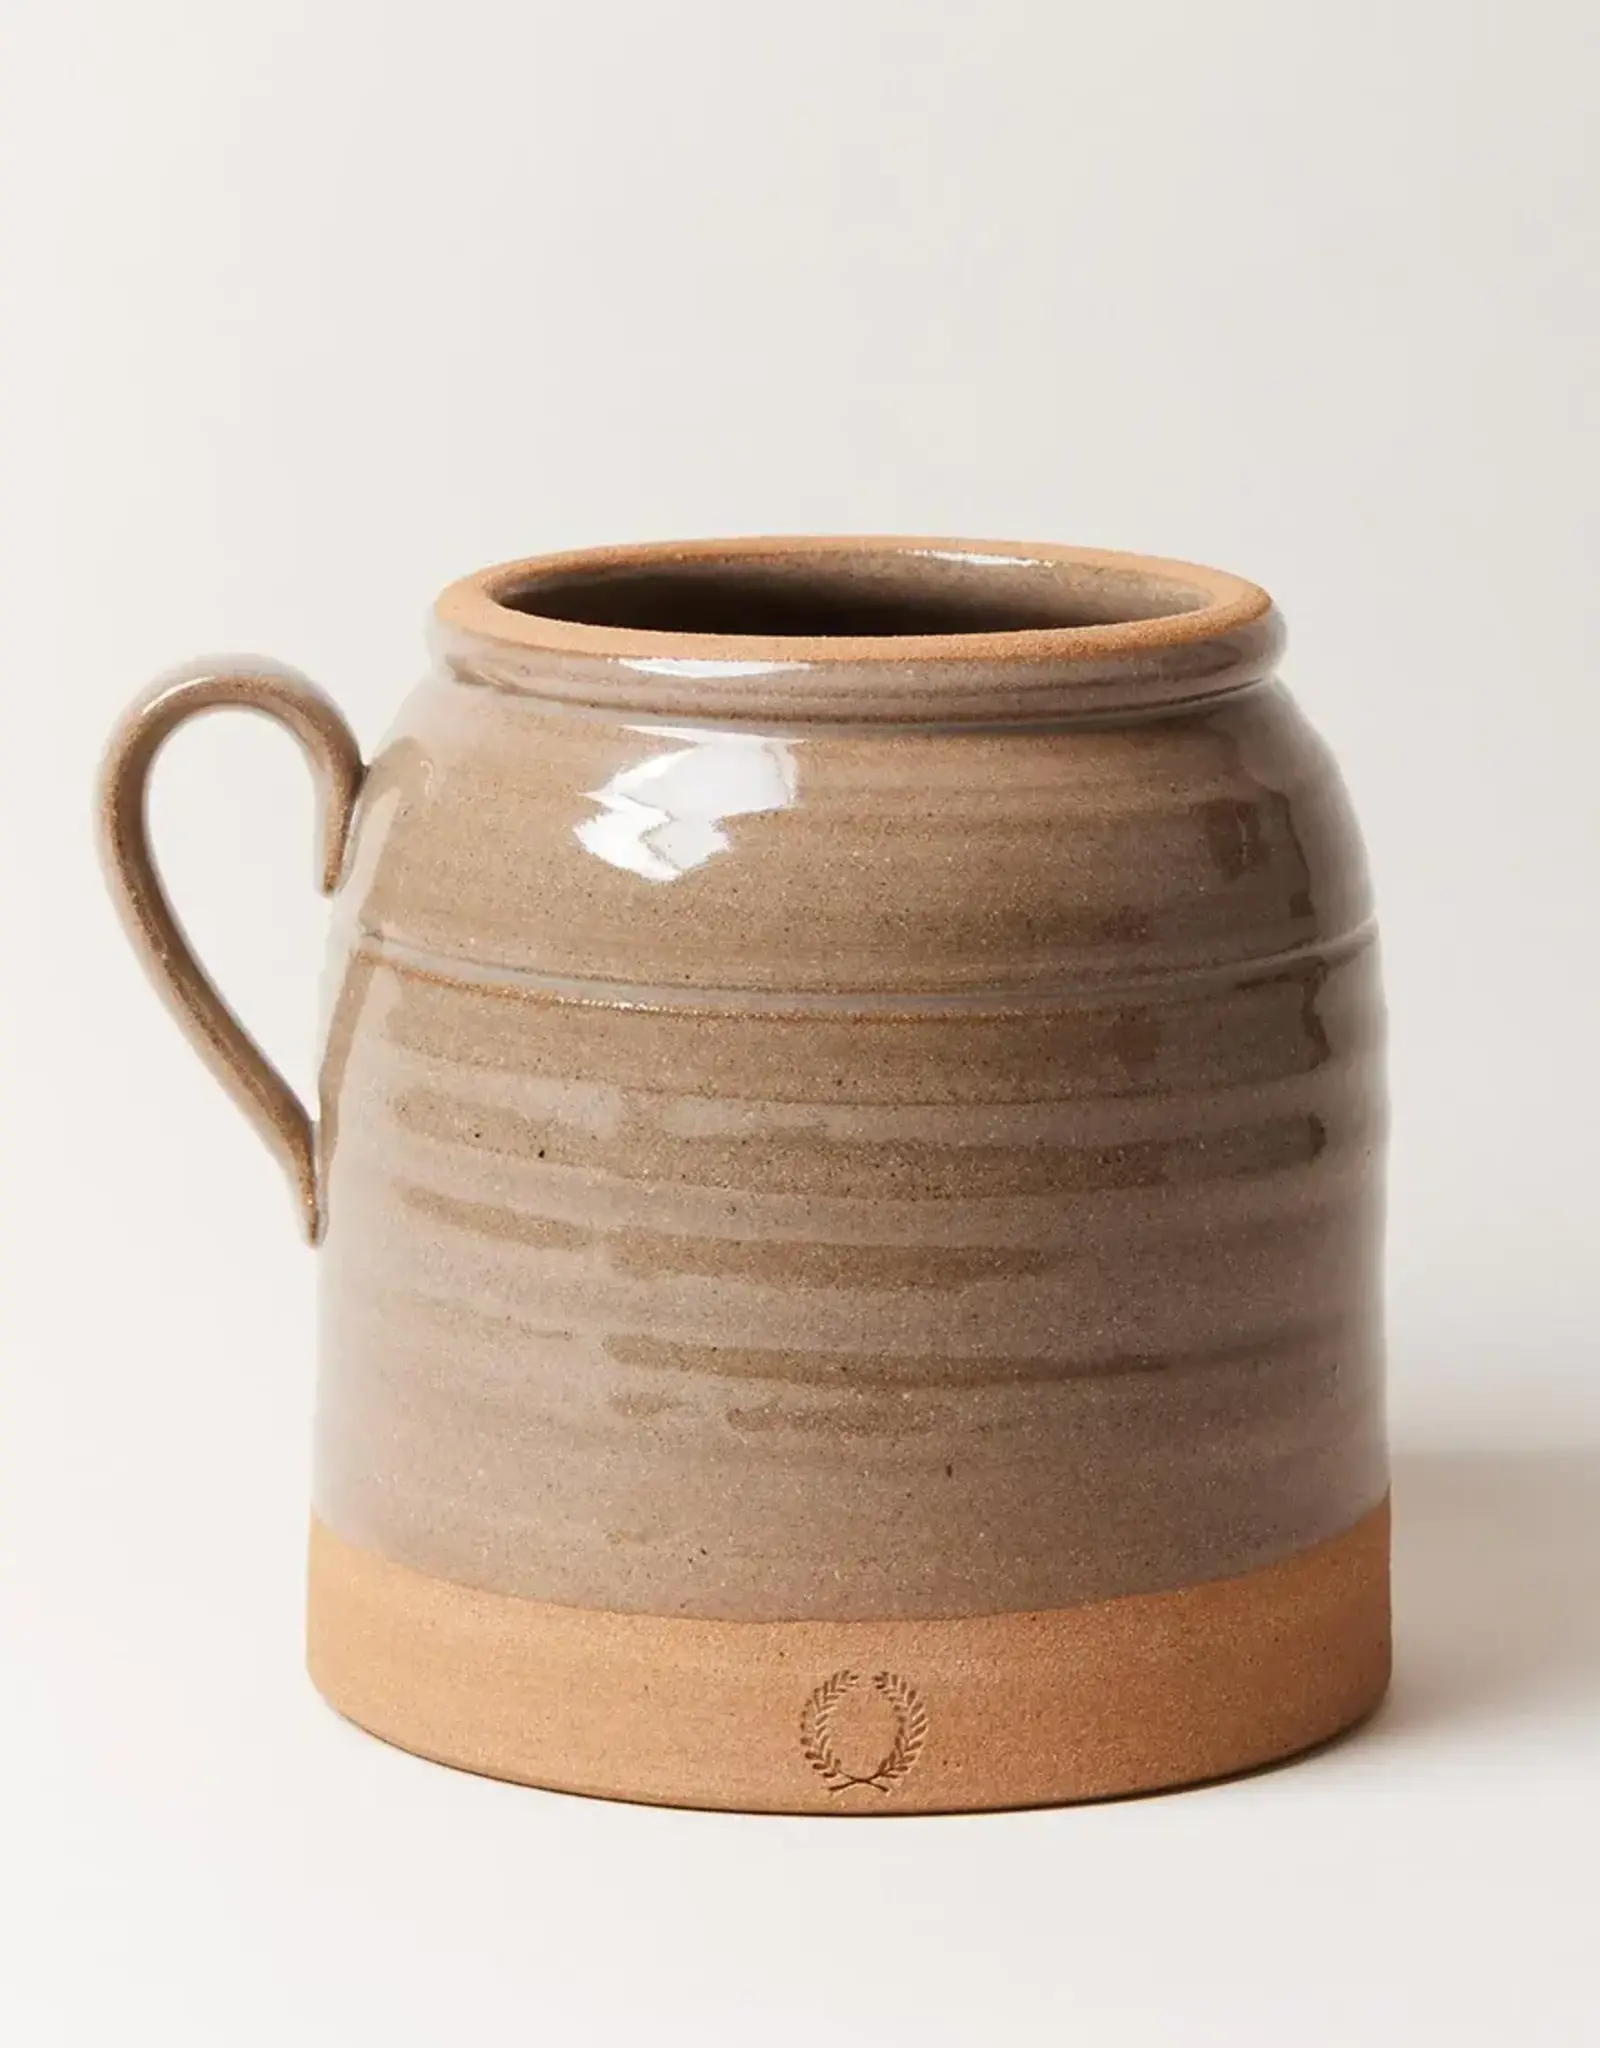 Farmhouse Pottery French Country Crock Flax Stoneware, Medium